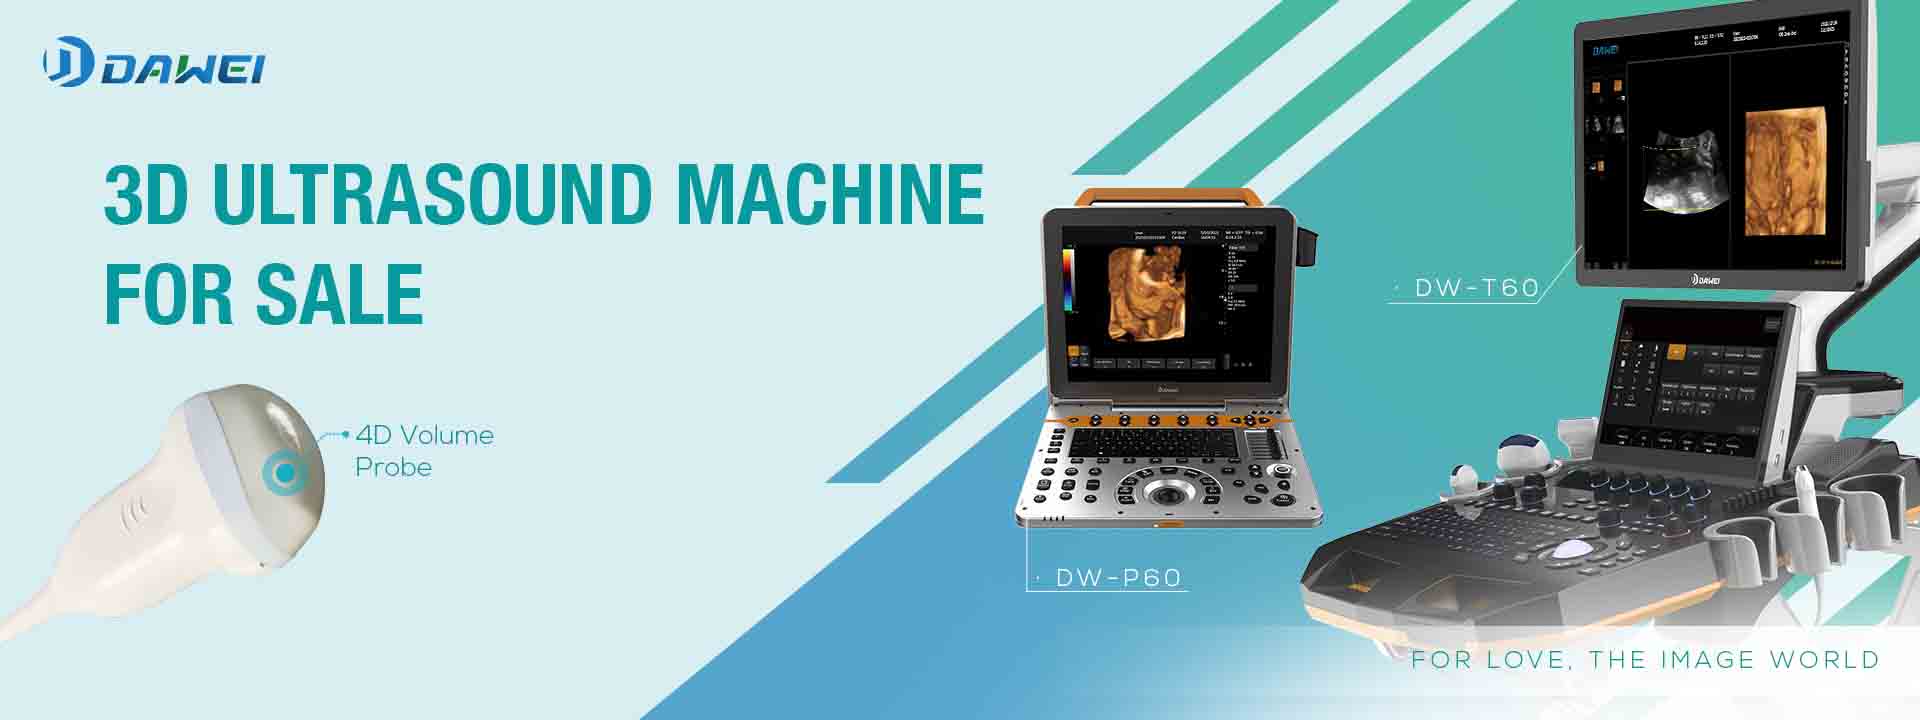 Dawei میڈیکل 3D الٹراساؤنڈ مشین برائے فروخت